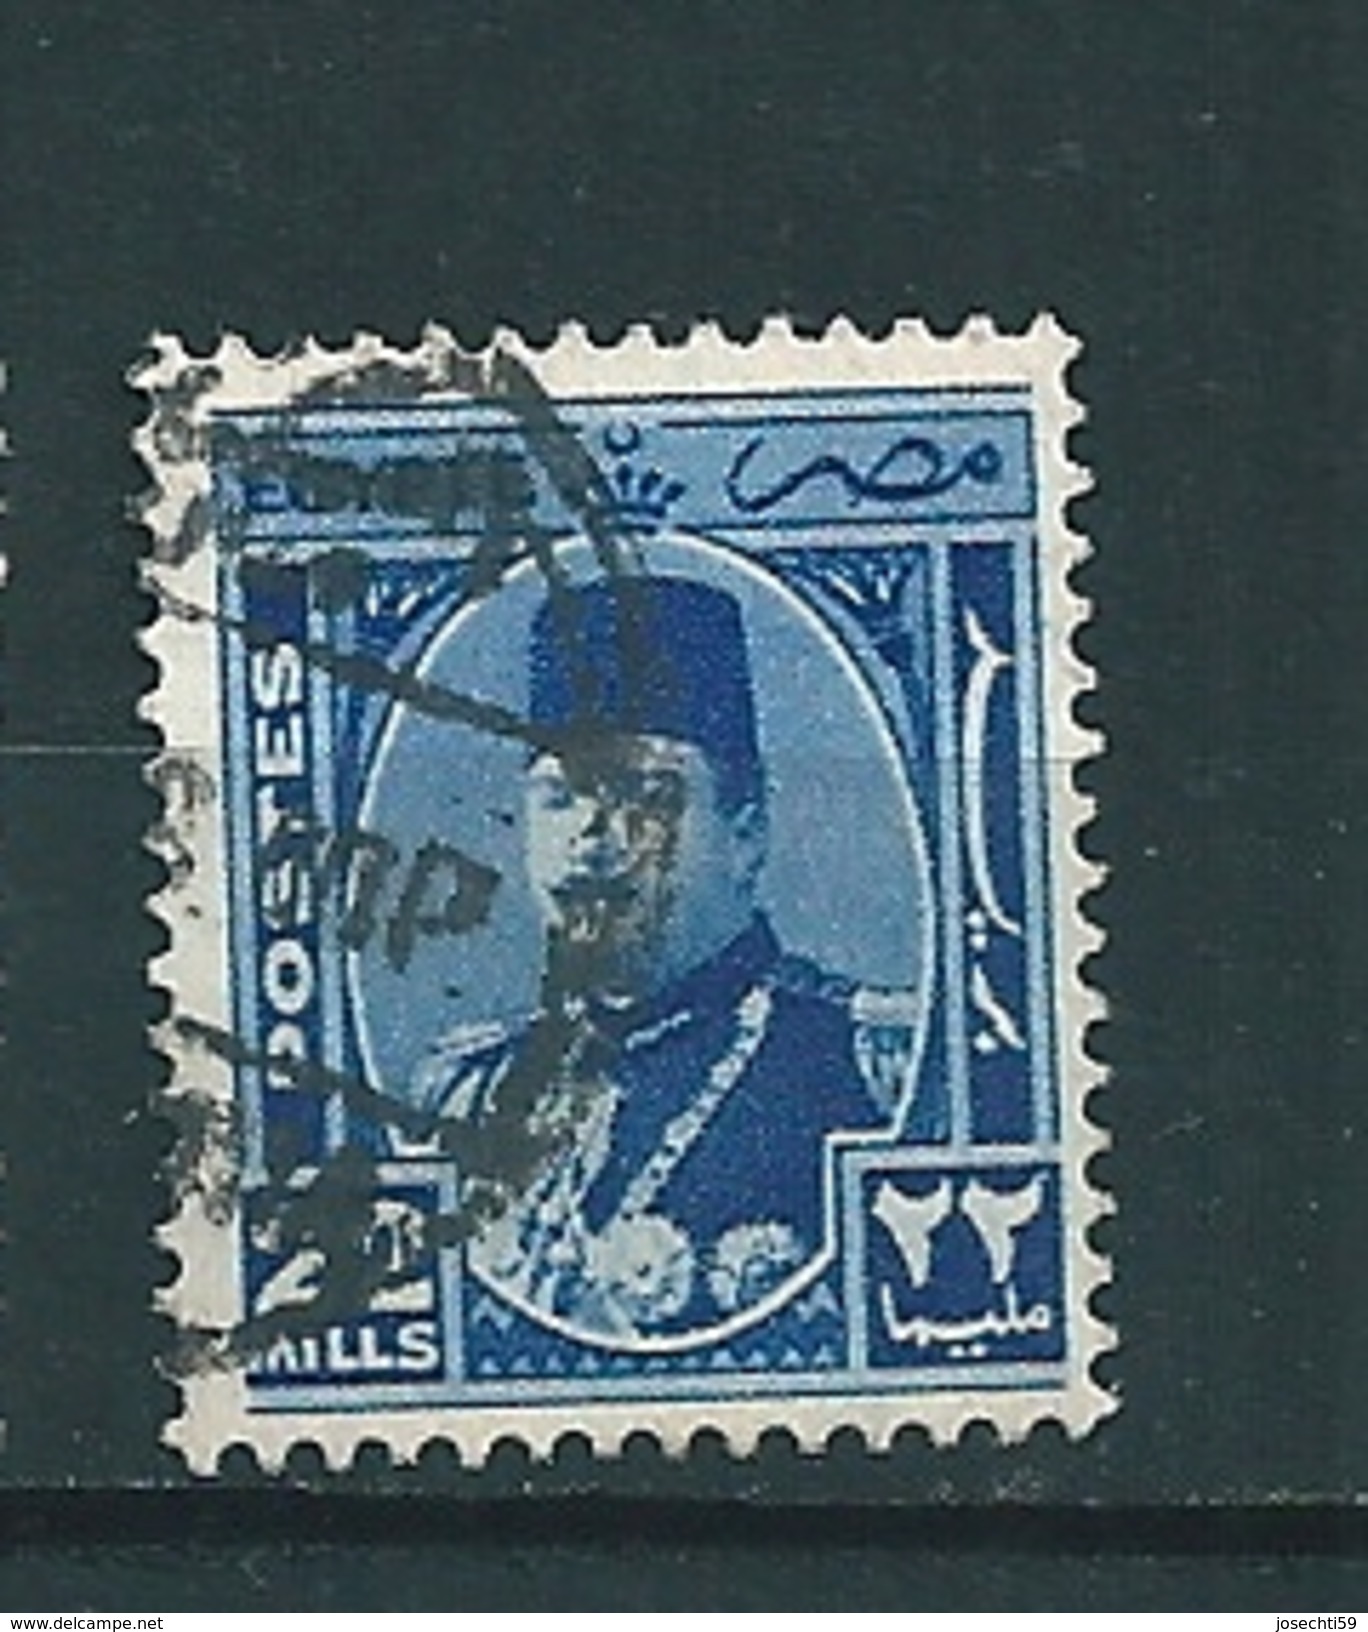 N° 232 Roi Farouk  TIMBRE Egypte (1946) Oblitéré Aminci - Usados